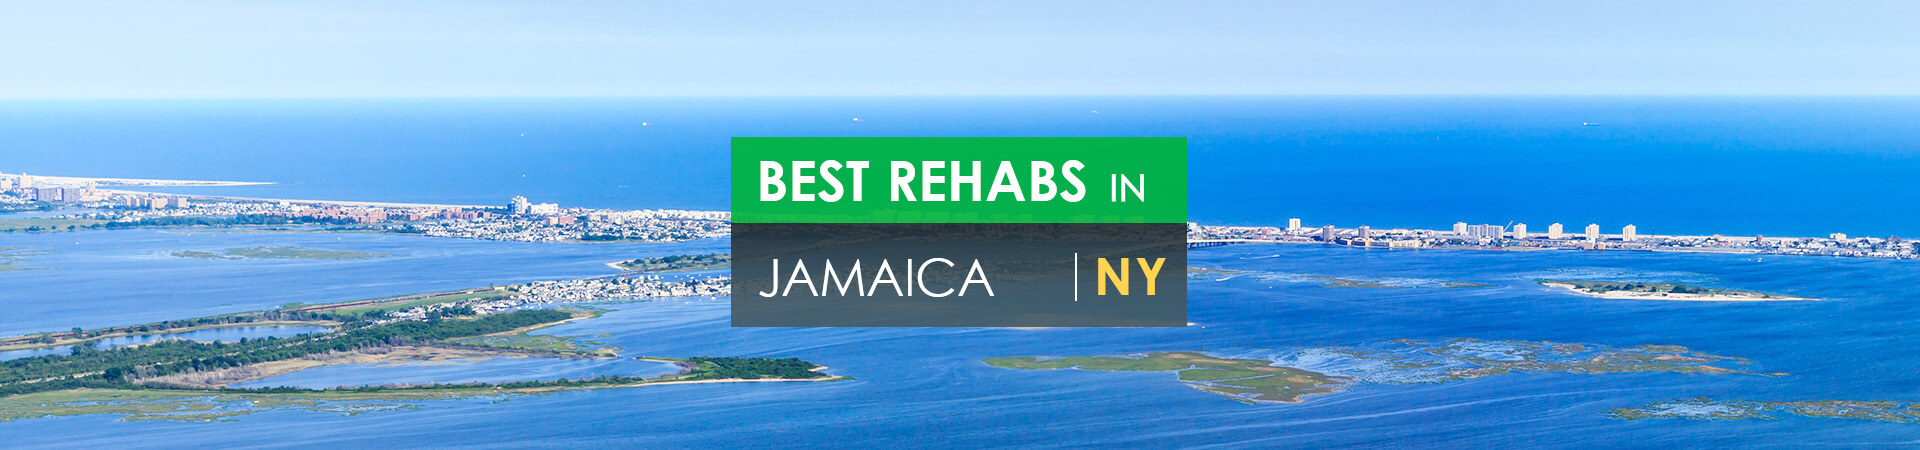 Best rehabs in Jamaica, NY